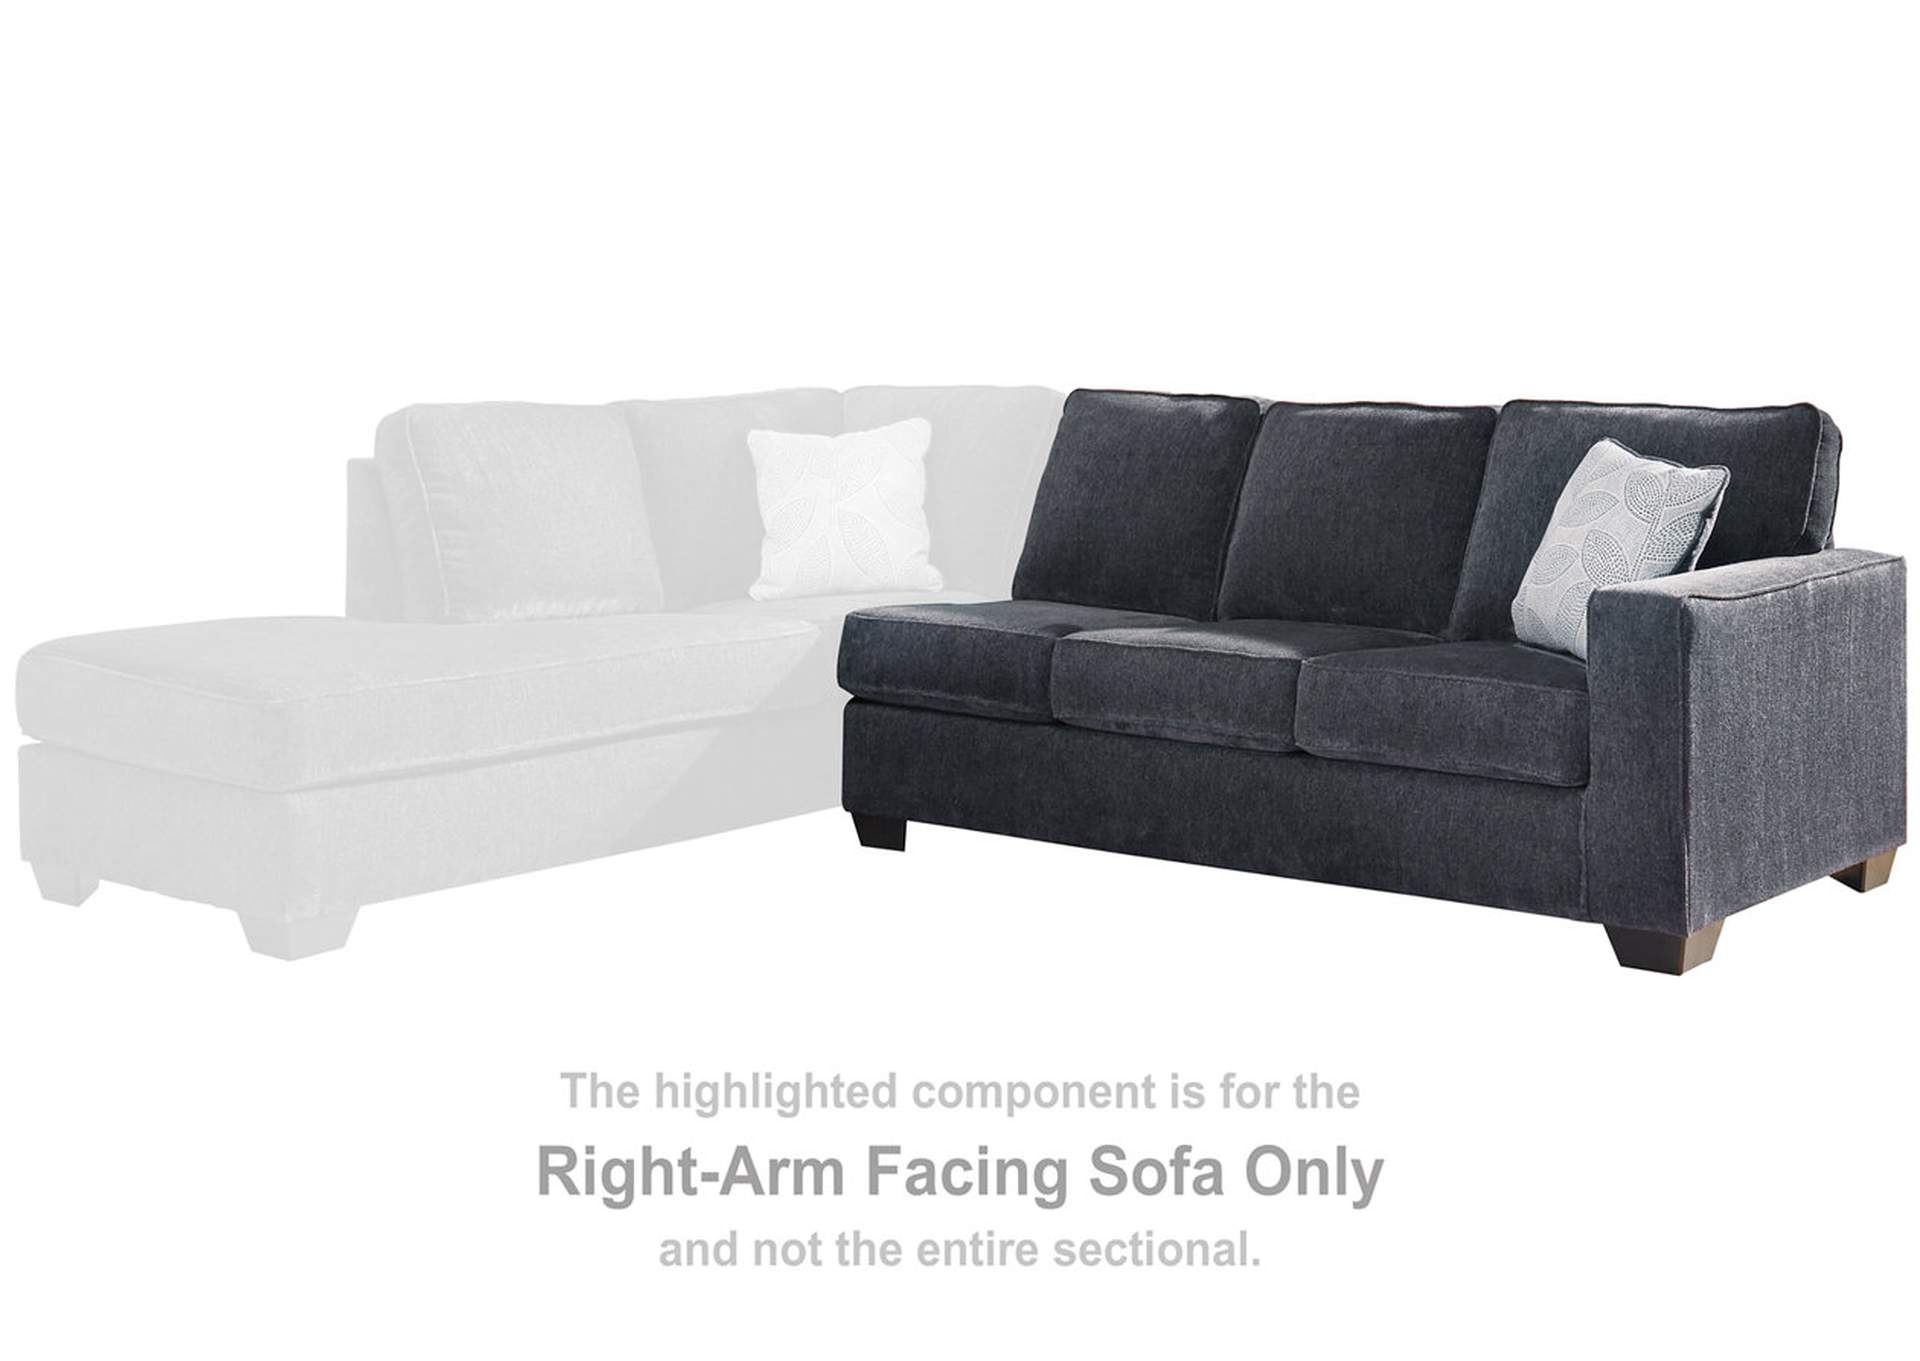 Altari Right-Arm Facing Sofa,Signature Design By Ashley